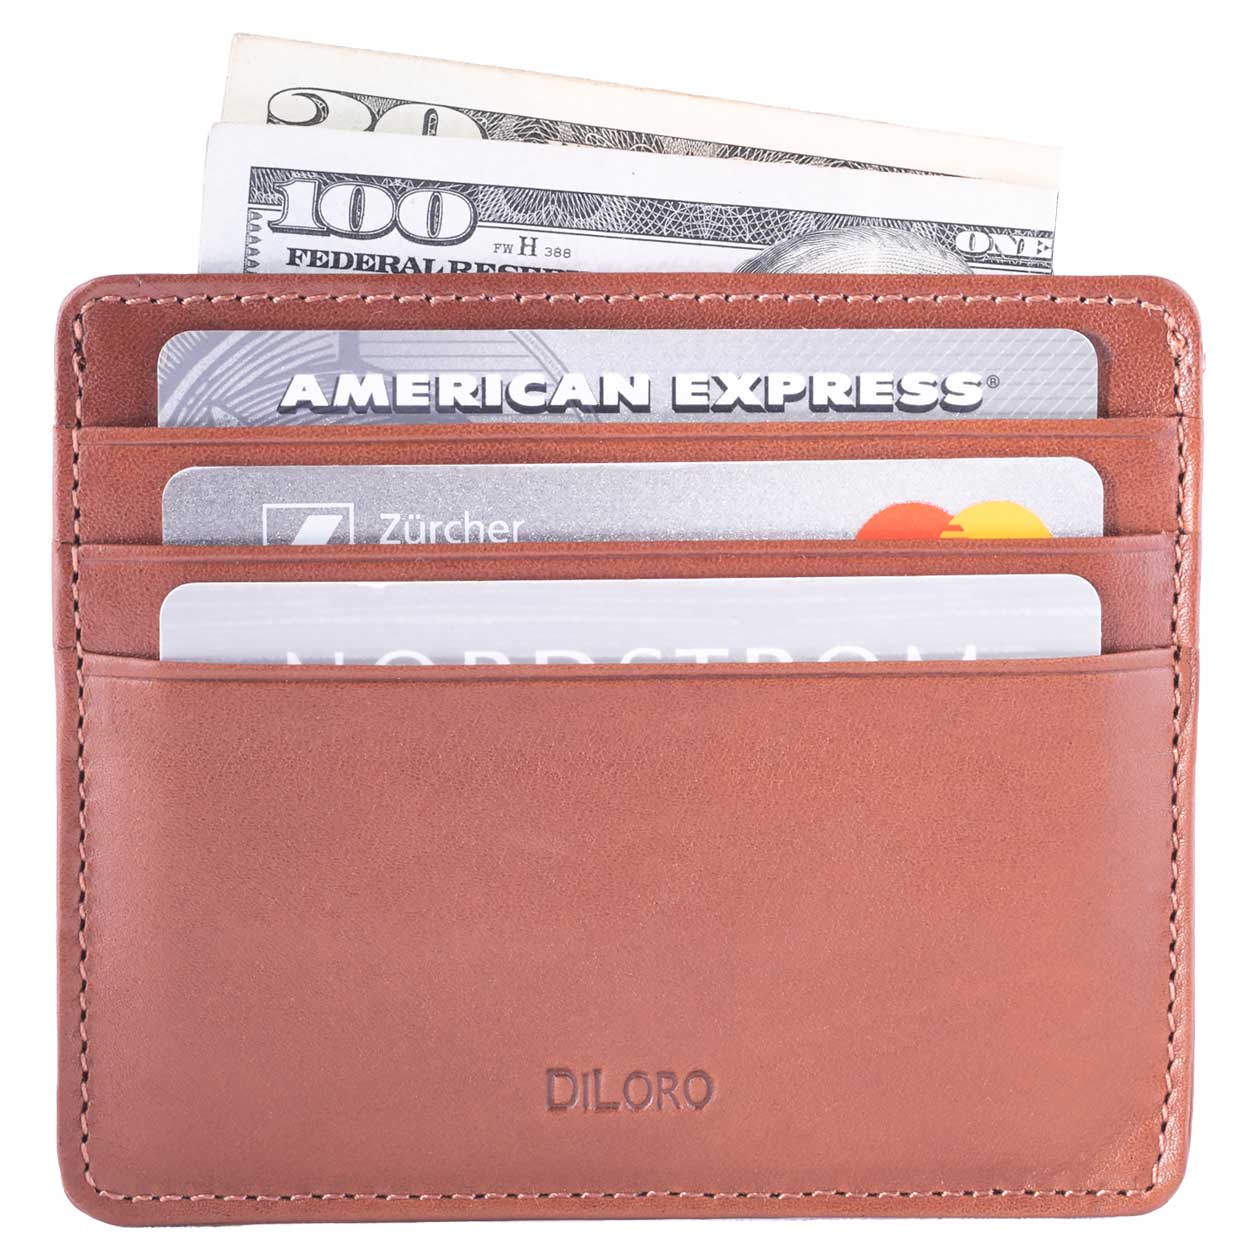 Leather Card Holder Credit Card Wallet Minimalist Card 